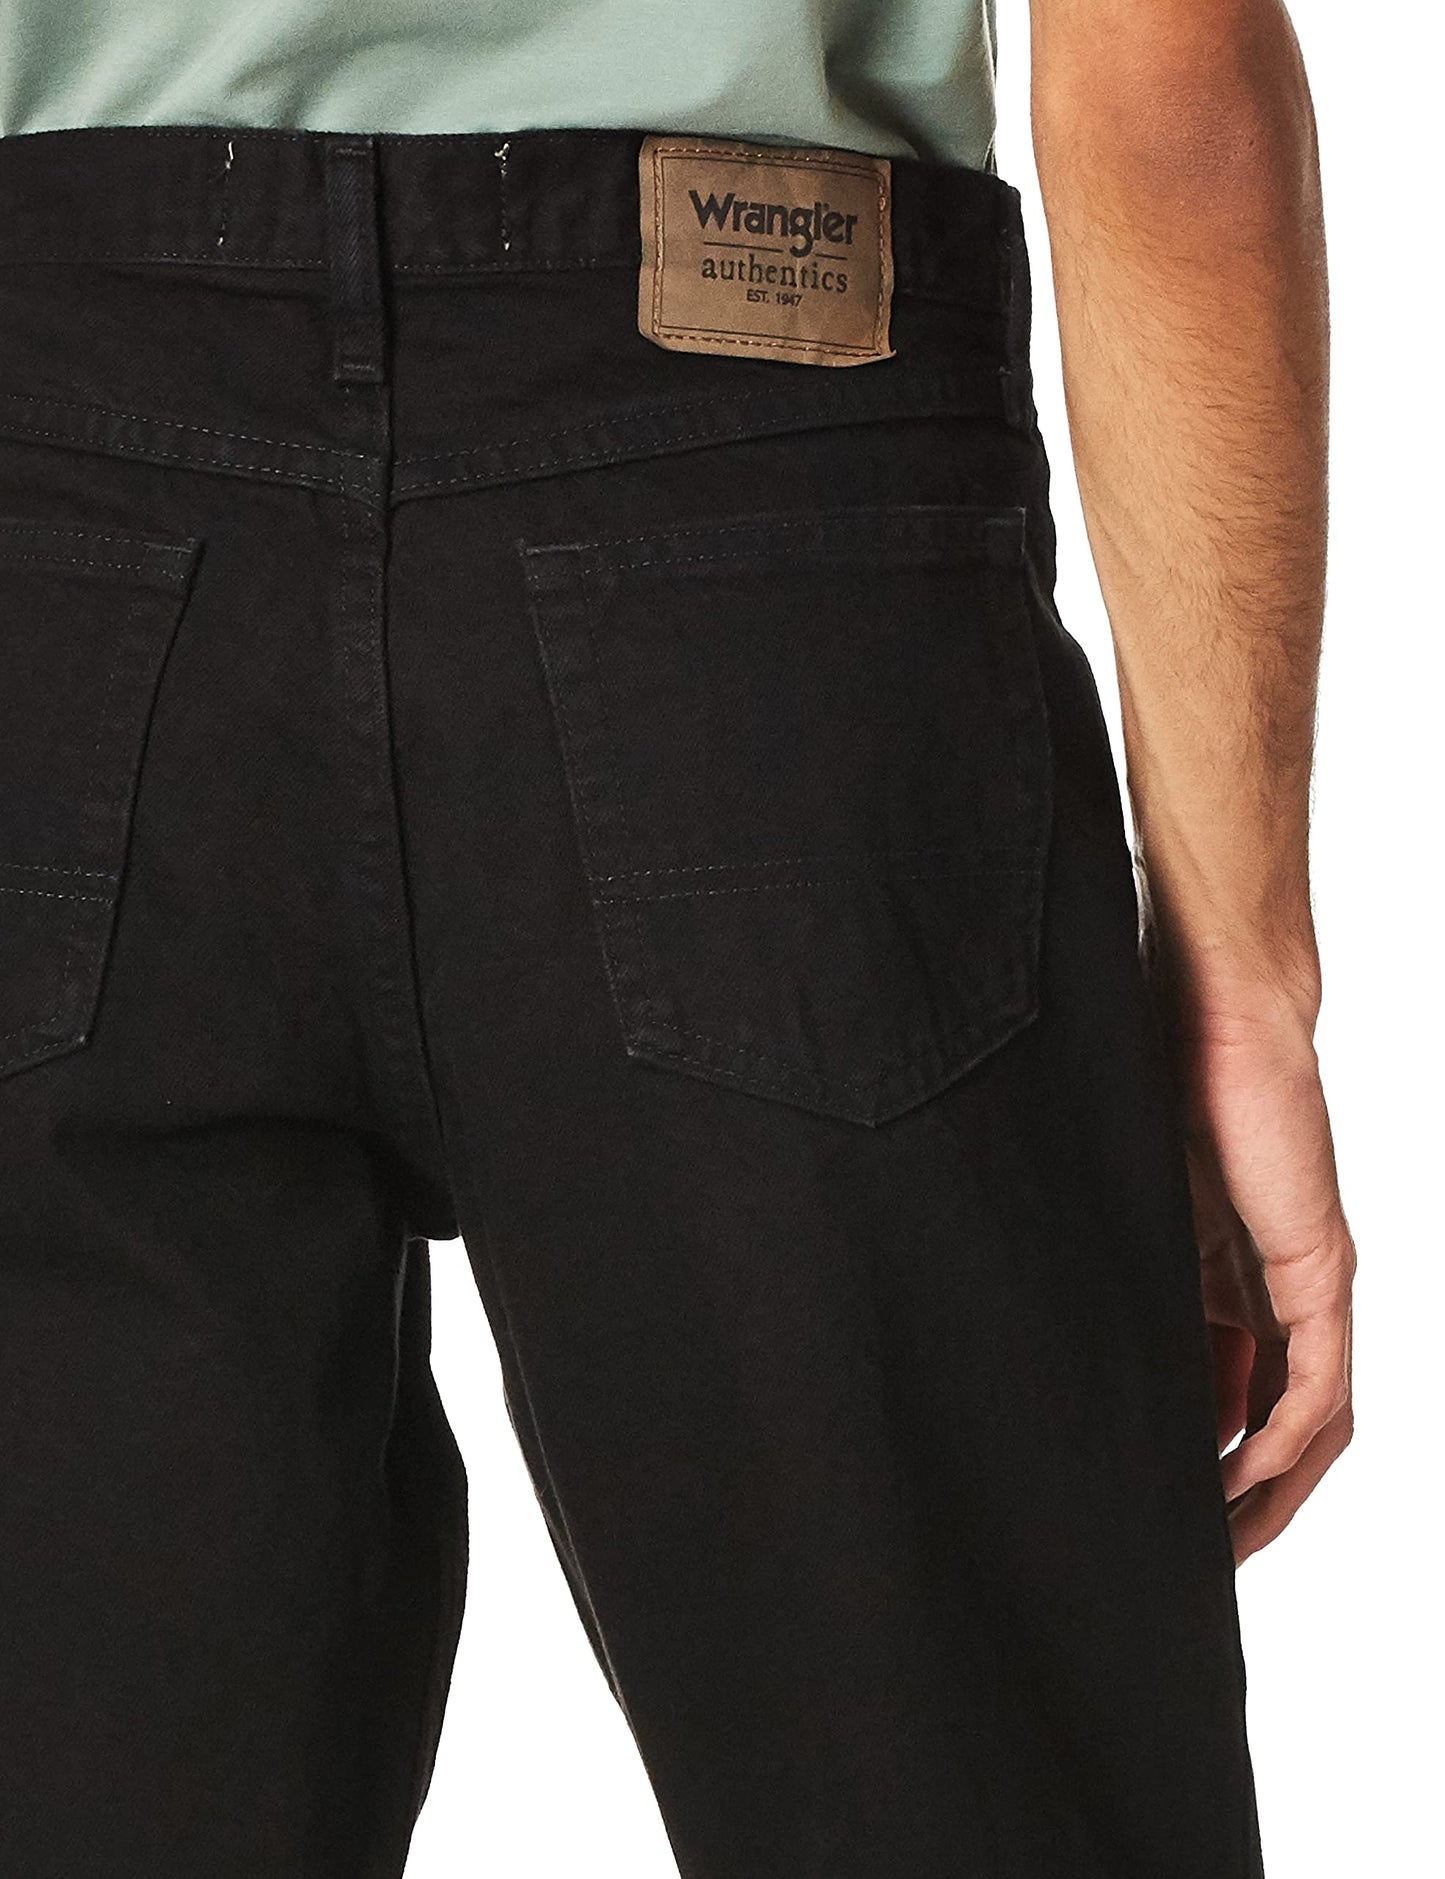 Wrangler Authentics Men's Classic 5-Pocket Relaxed Fit Cotton Jean, Black, 36W x 29L